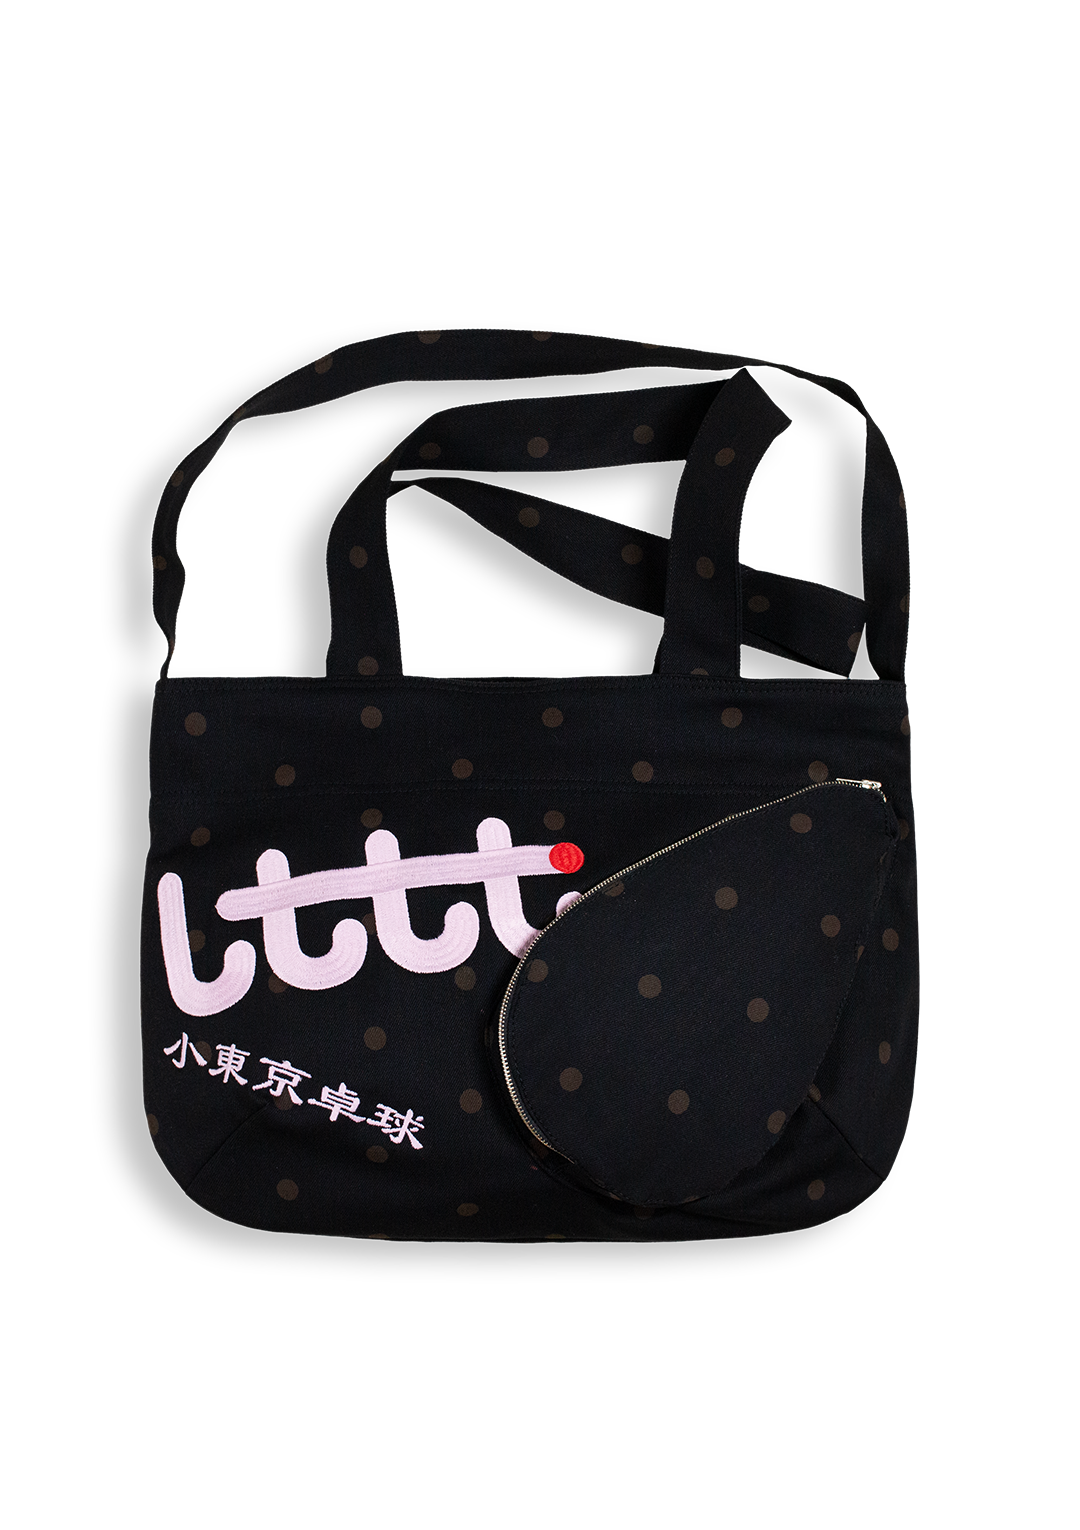 LTTT - Pyo bag 9